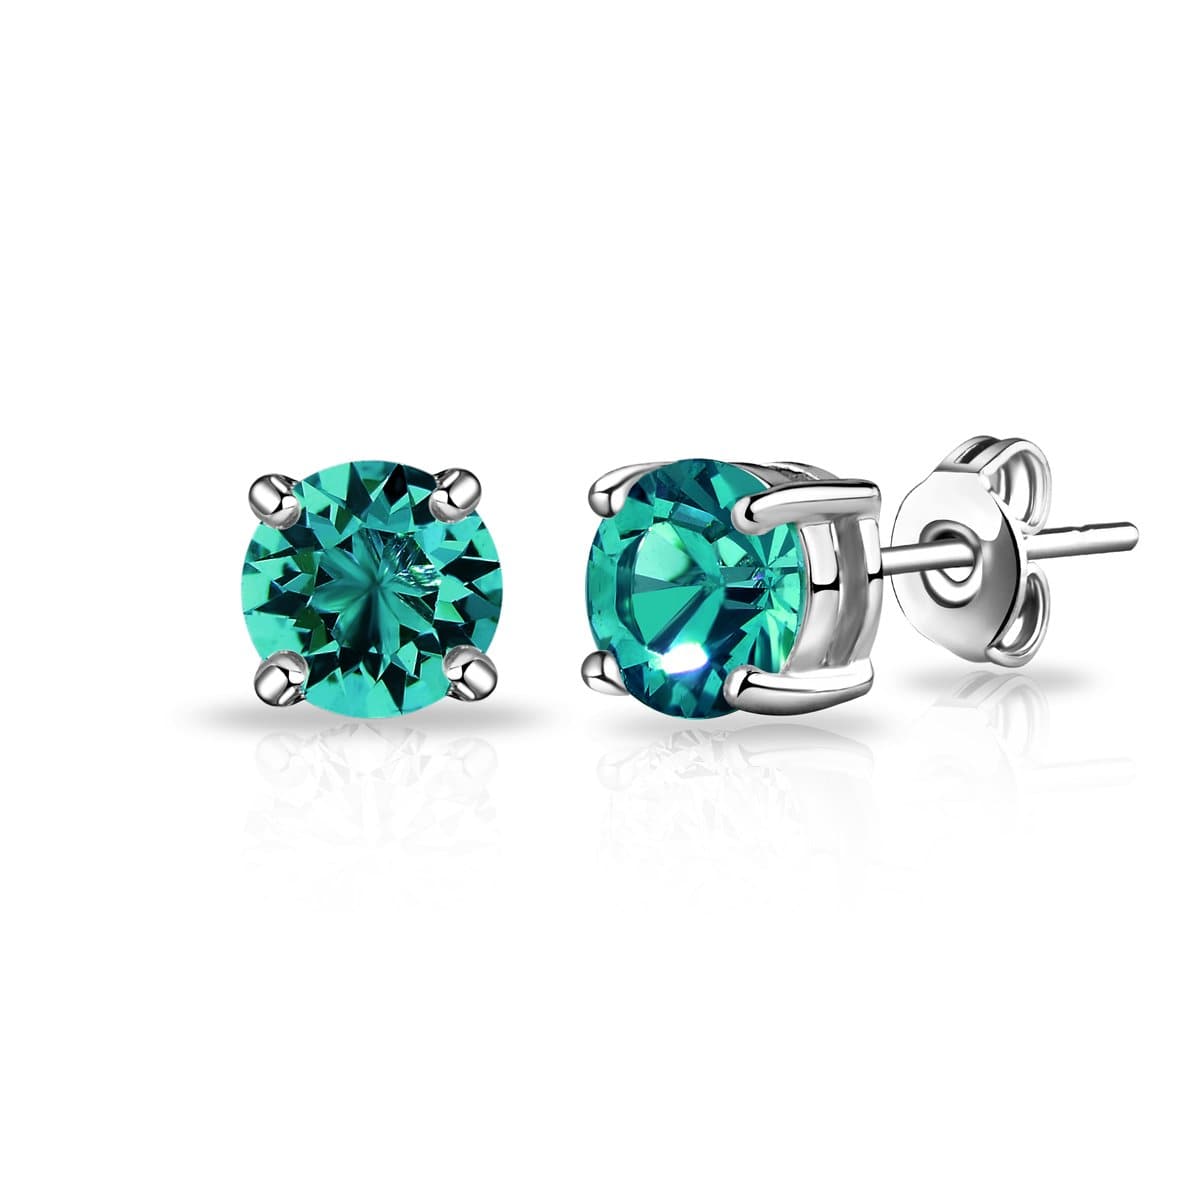 Green Stud Earrings Created with Zircondia® Crystals by Philip Jones Jewellery